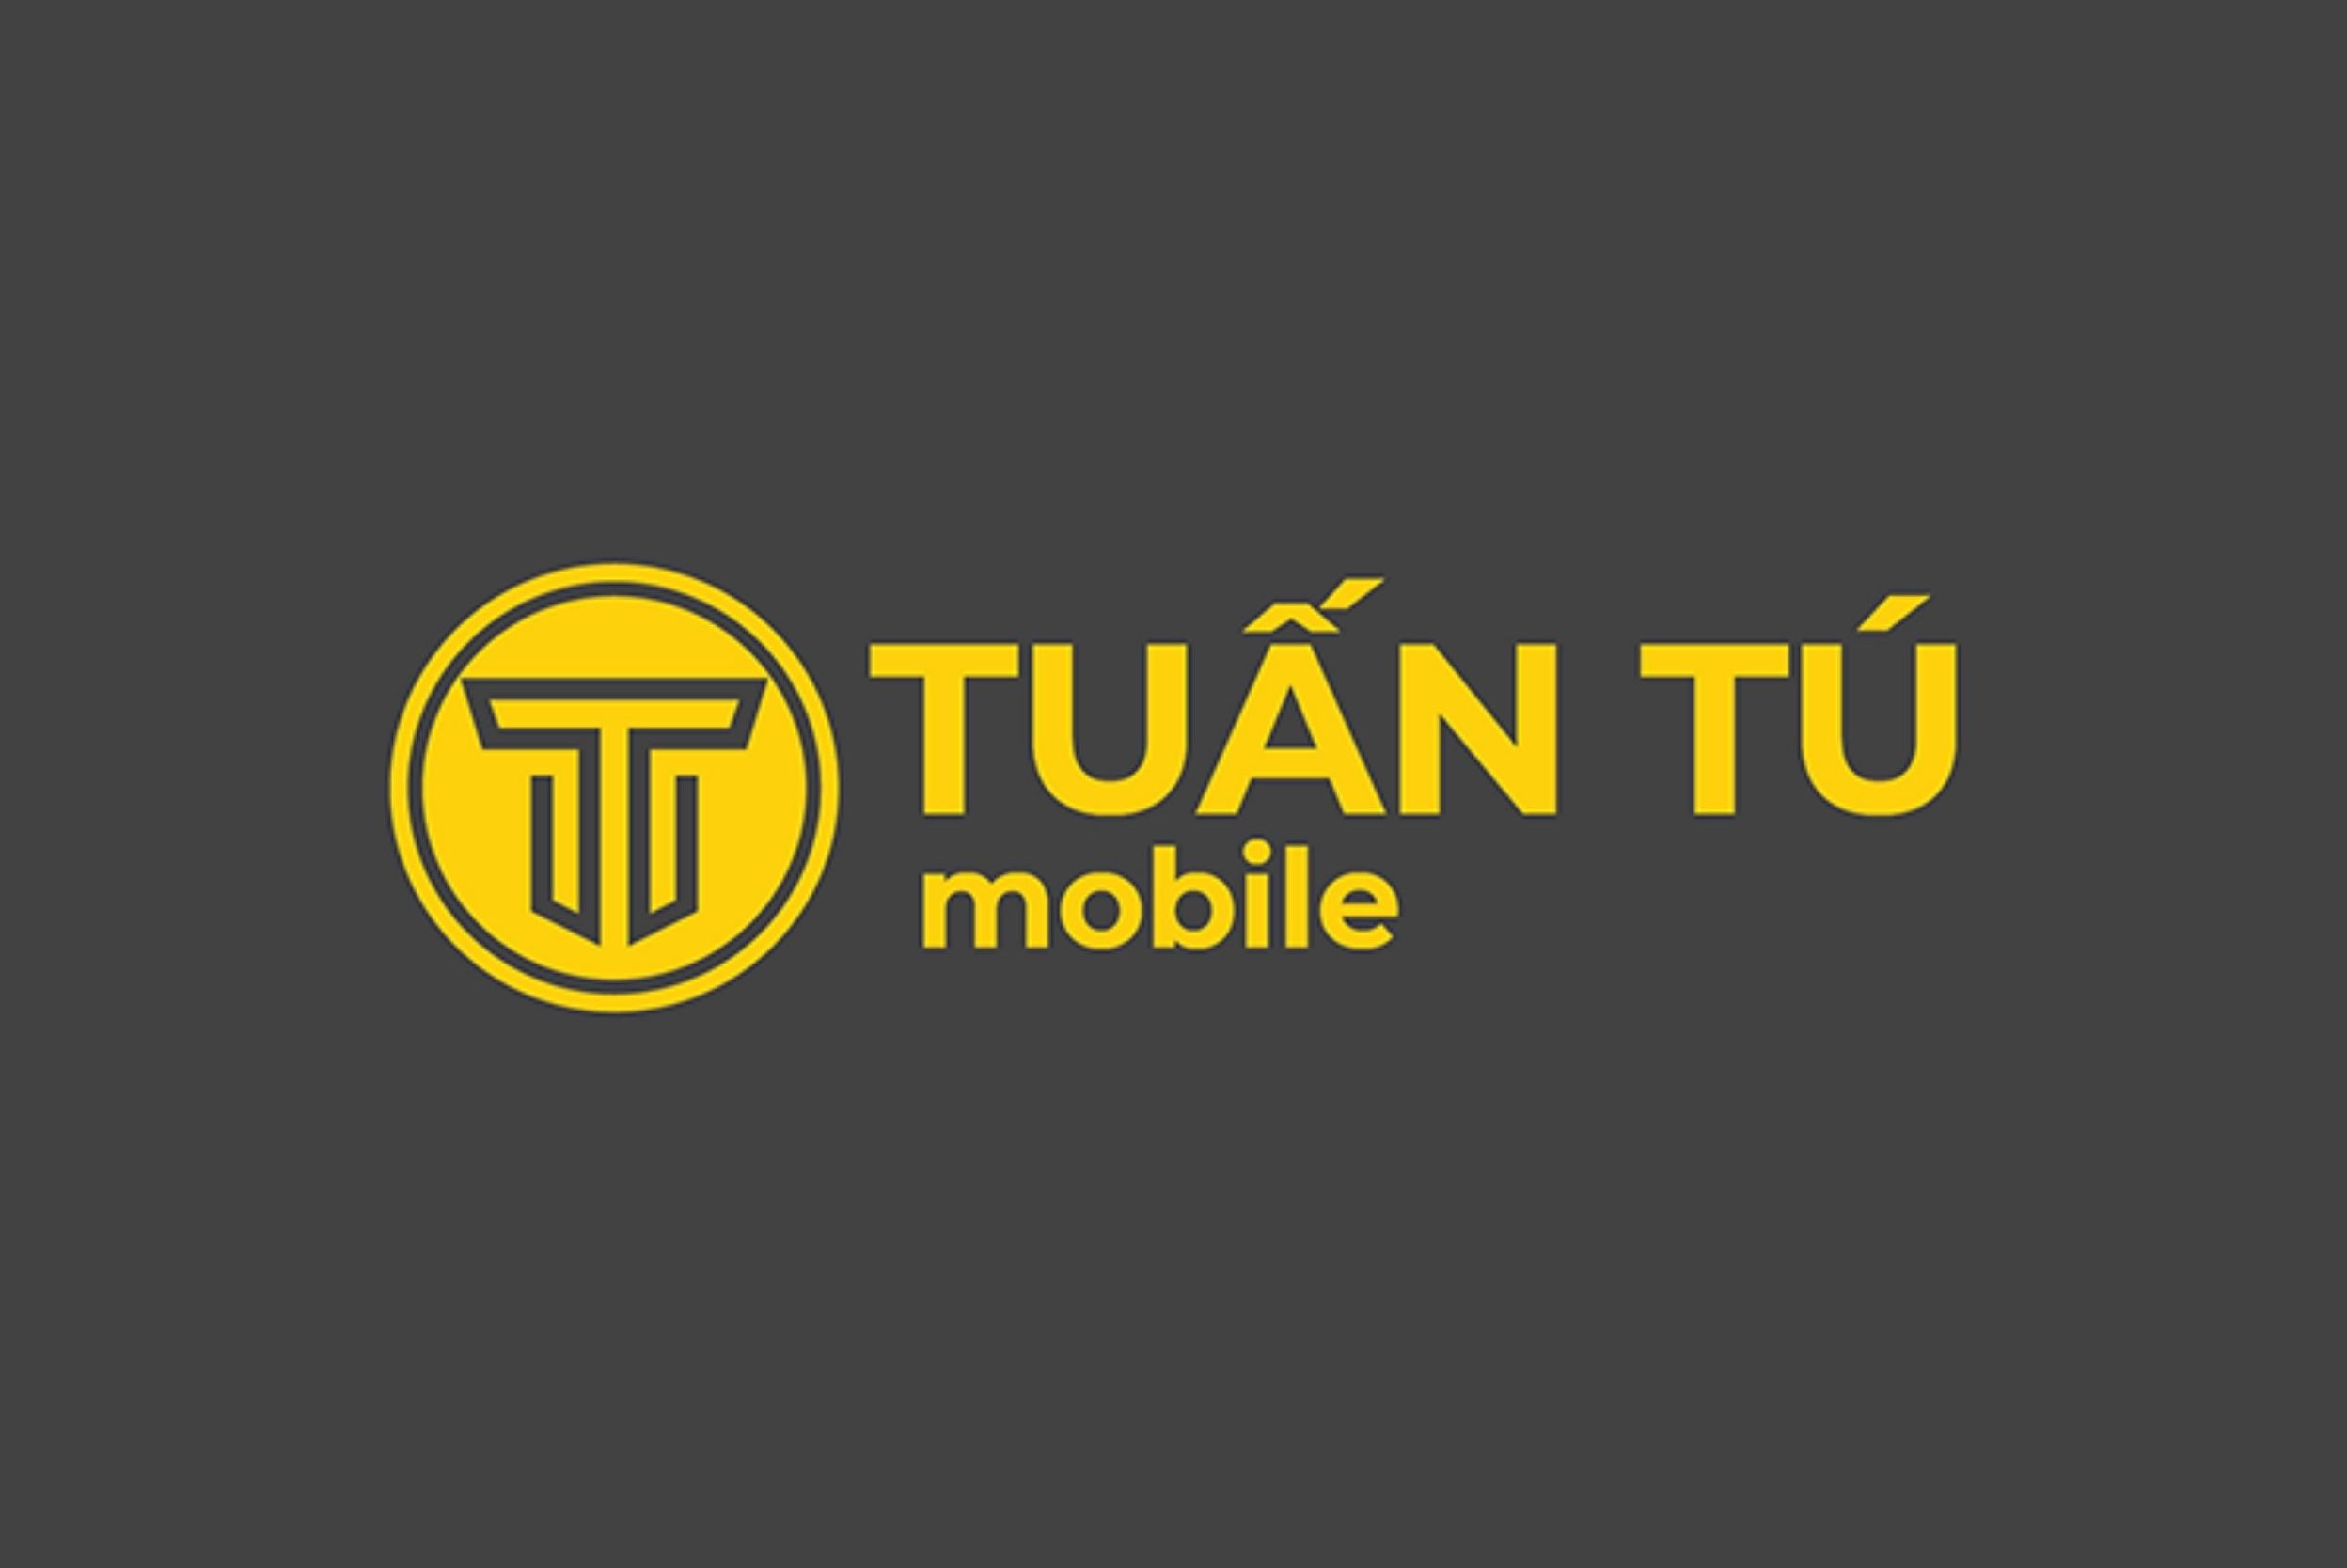 tuan-tu-mobile-logo